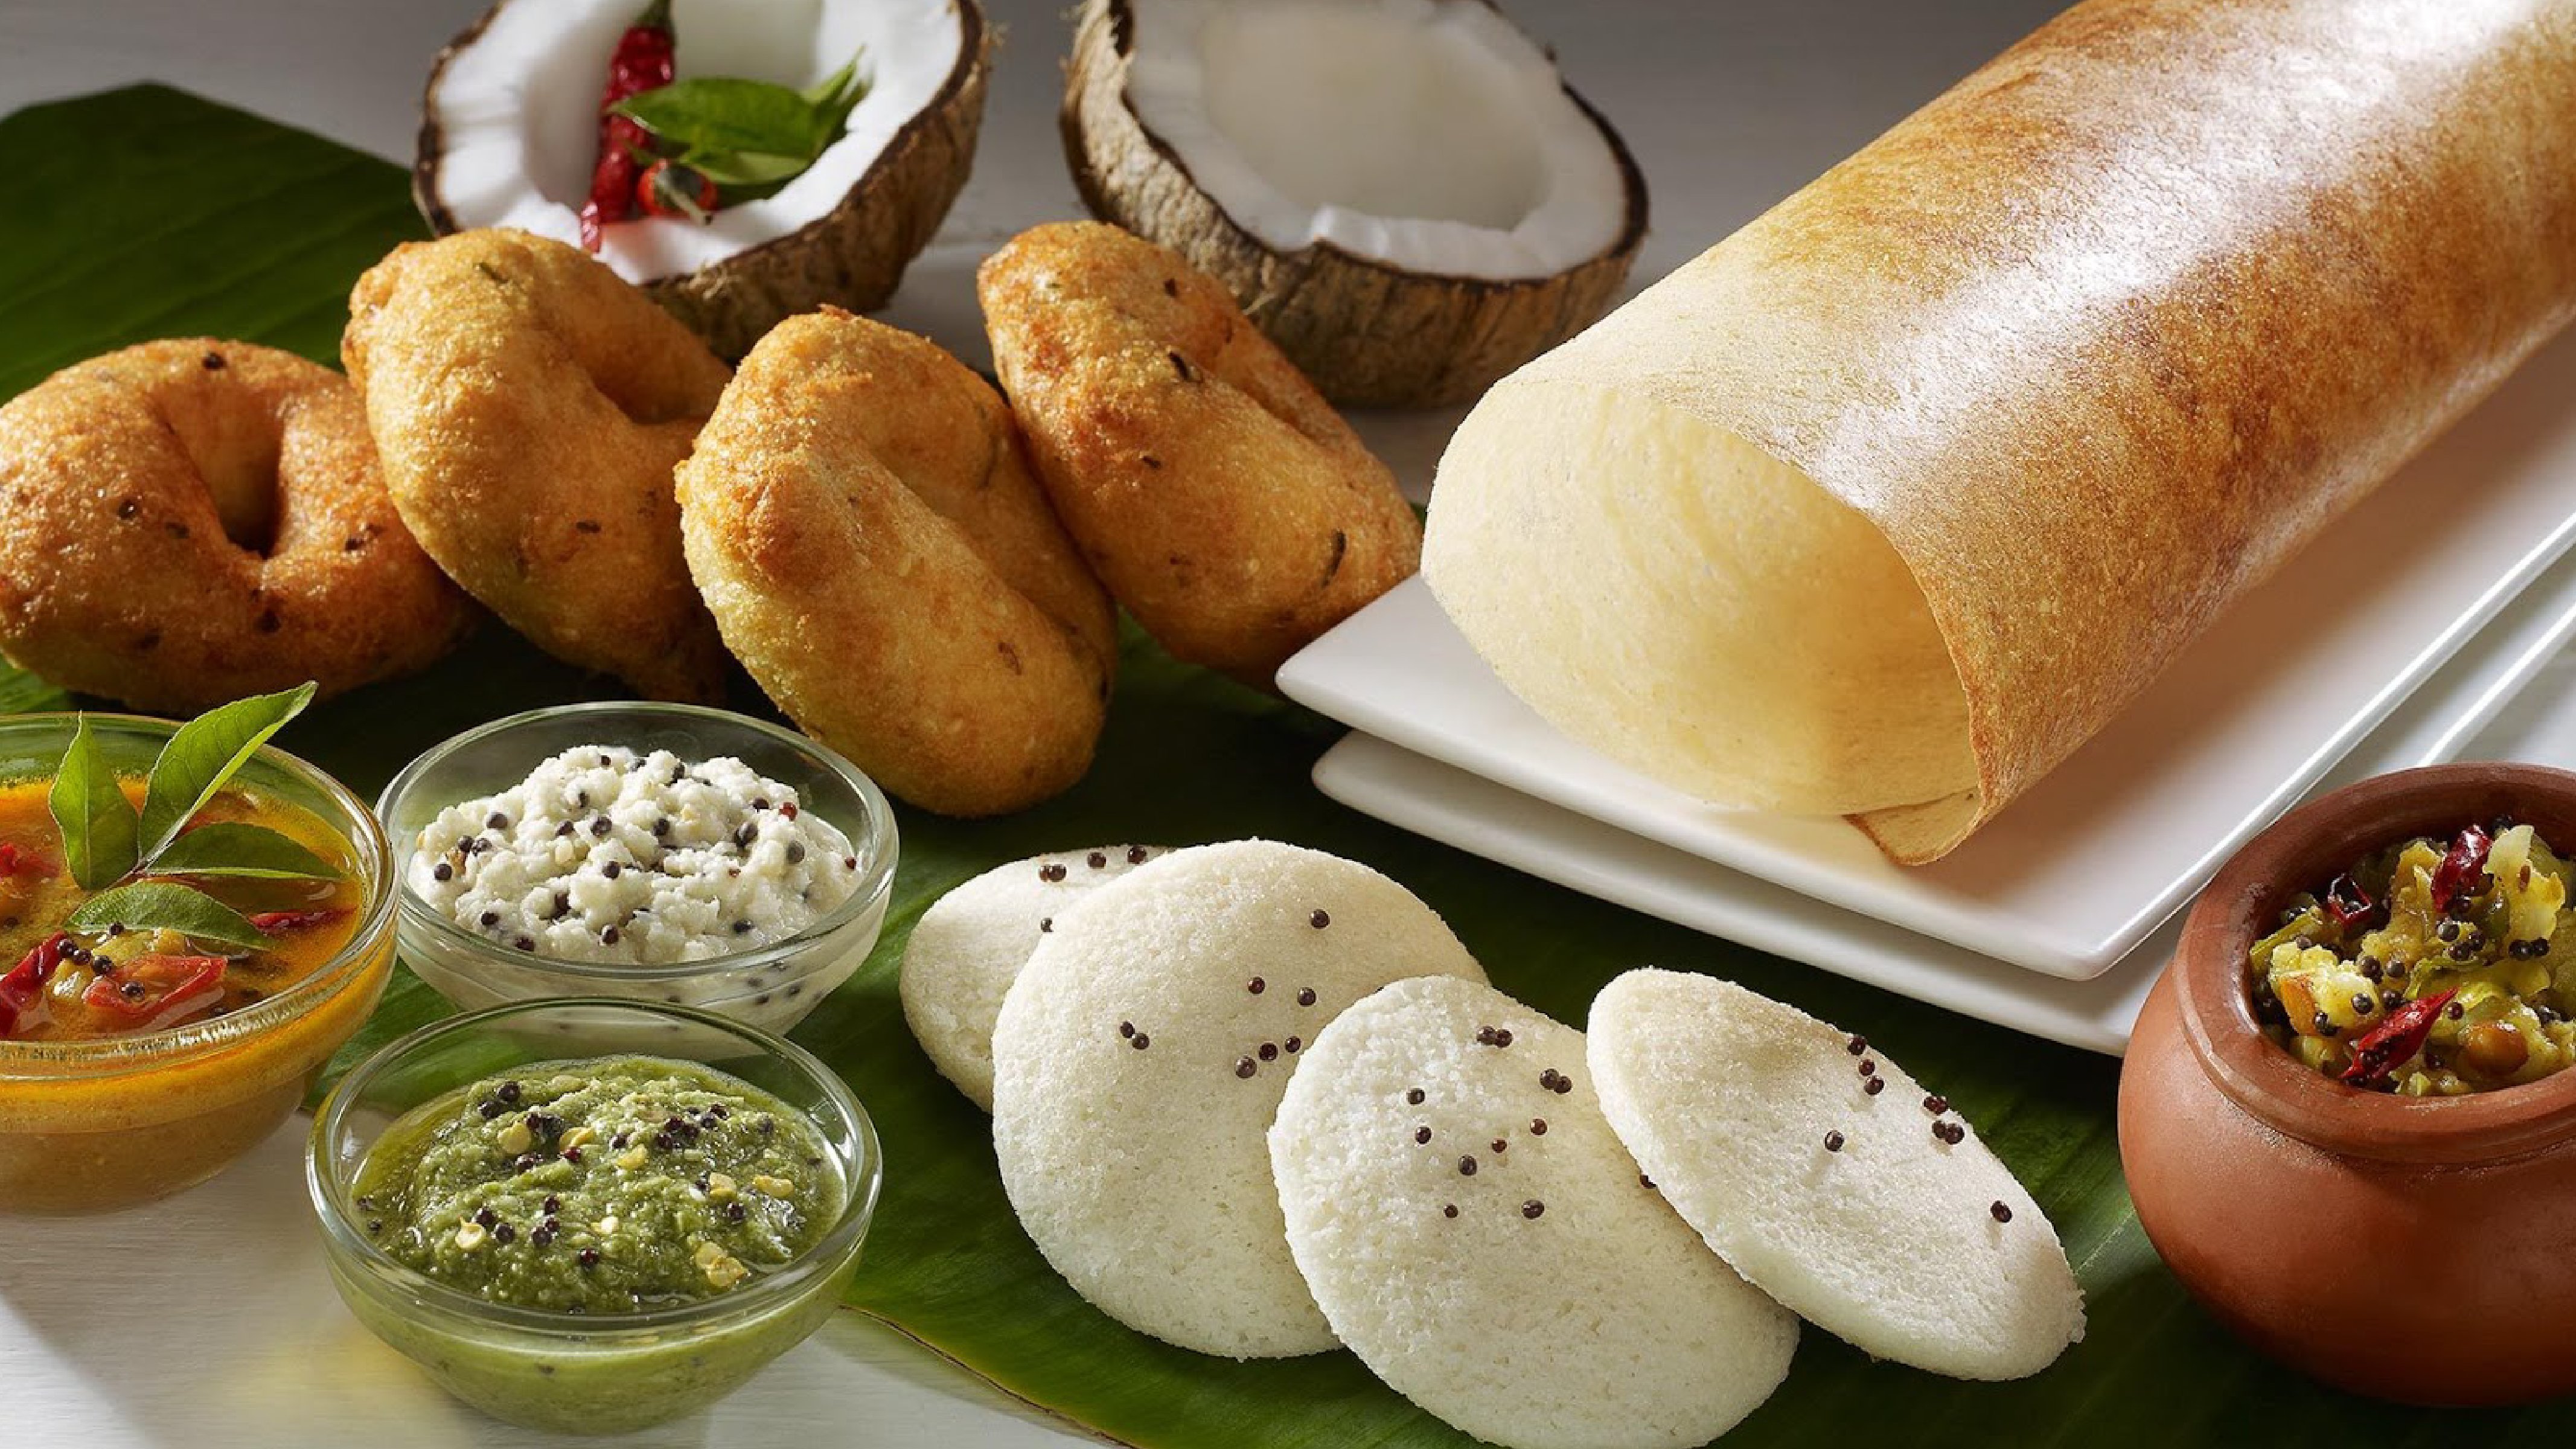 Kuppanna Restaurant in Austin offers Indian breakfast such as idlis, crispy dosas, vadas served with different chutneys.